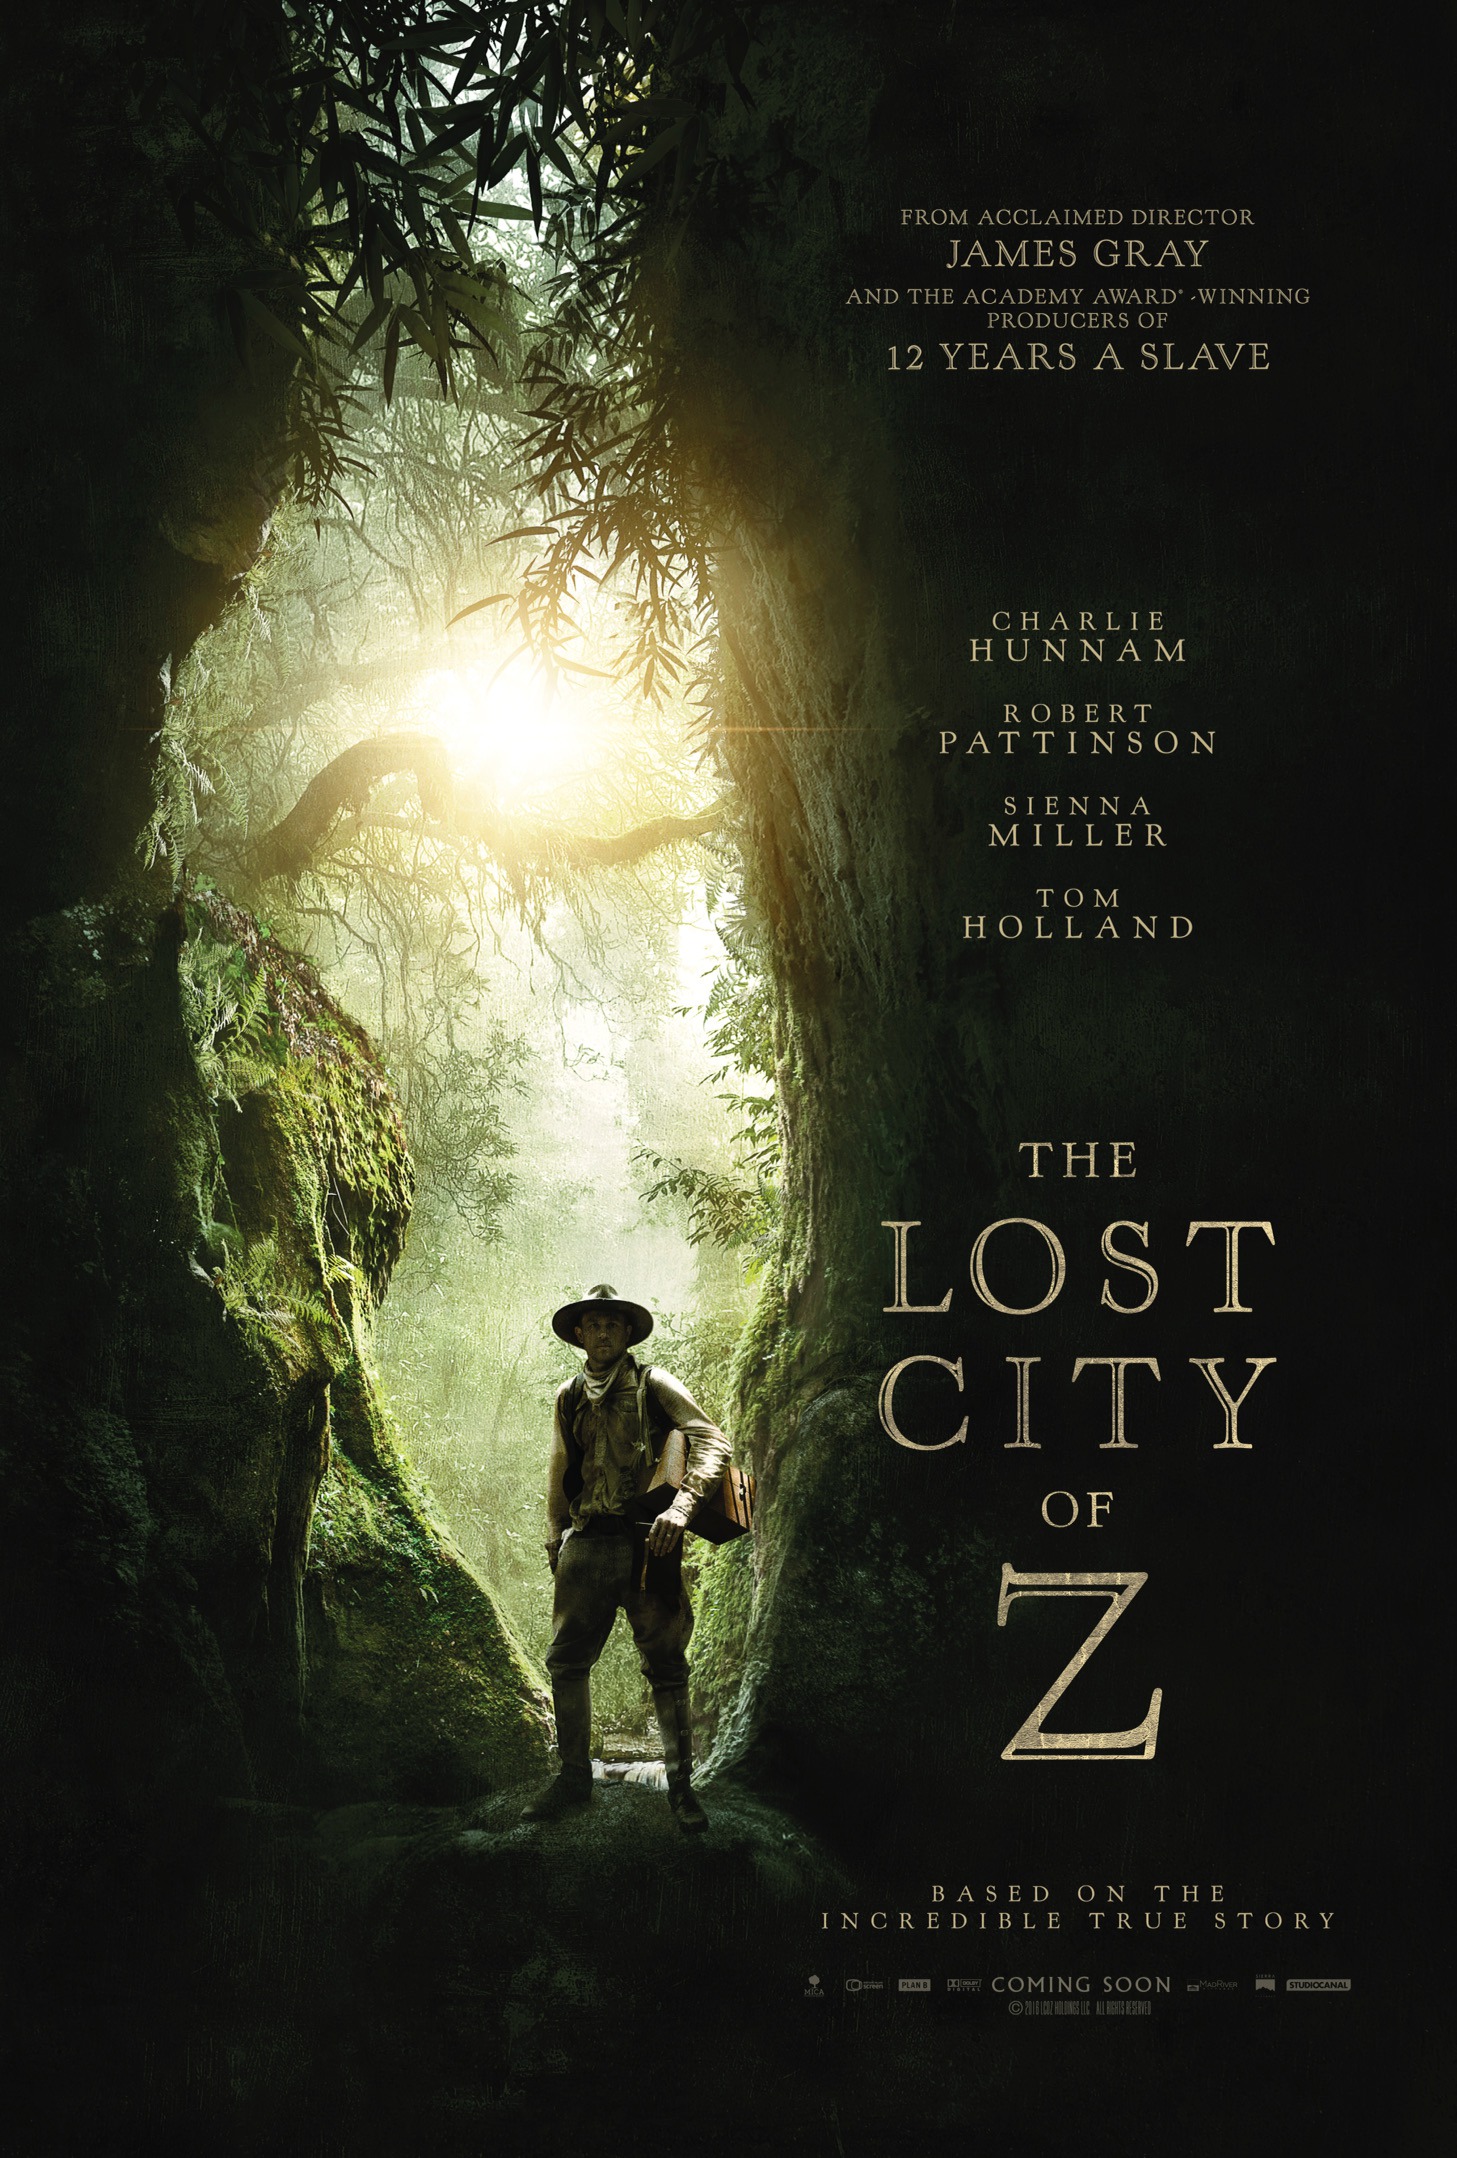 Nonton film The Lost City of Z layarkaca21 indoxx1 ganool online streaming terbaru